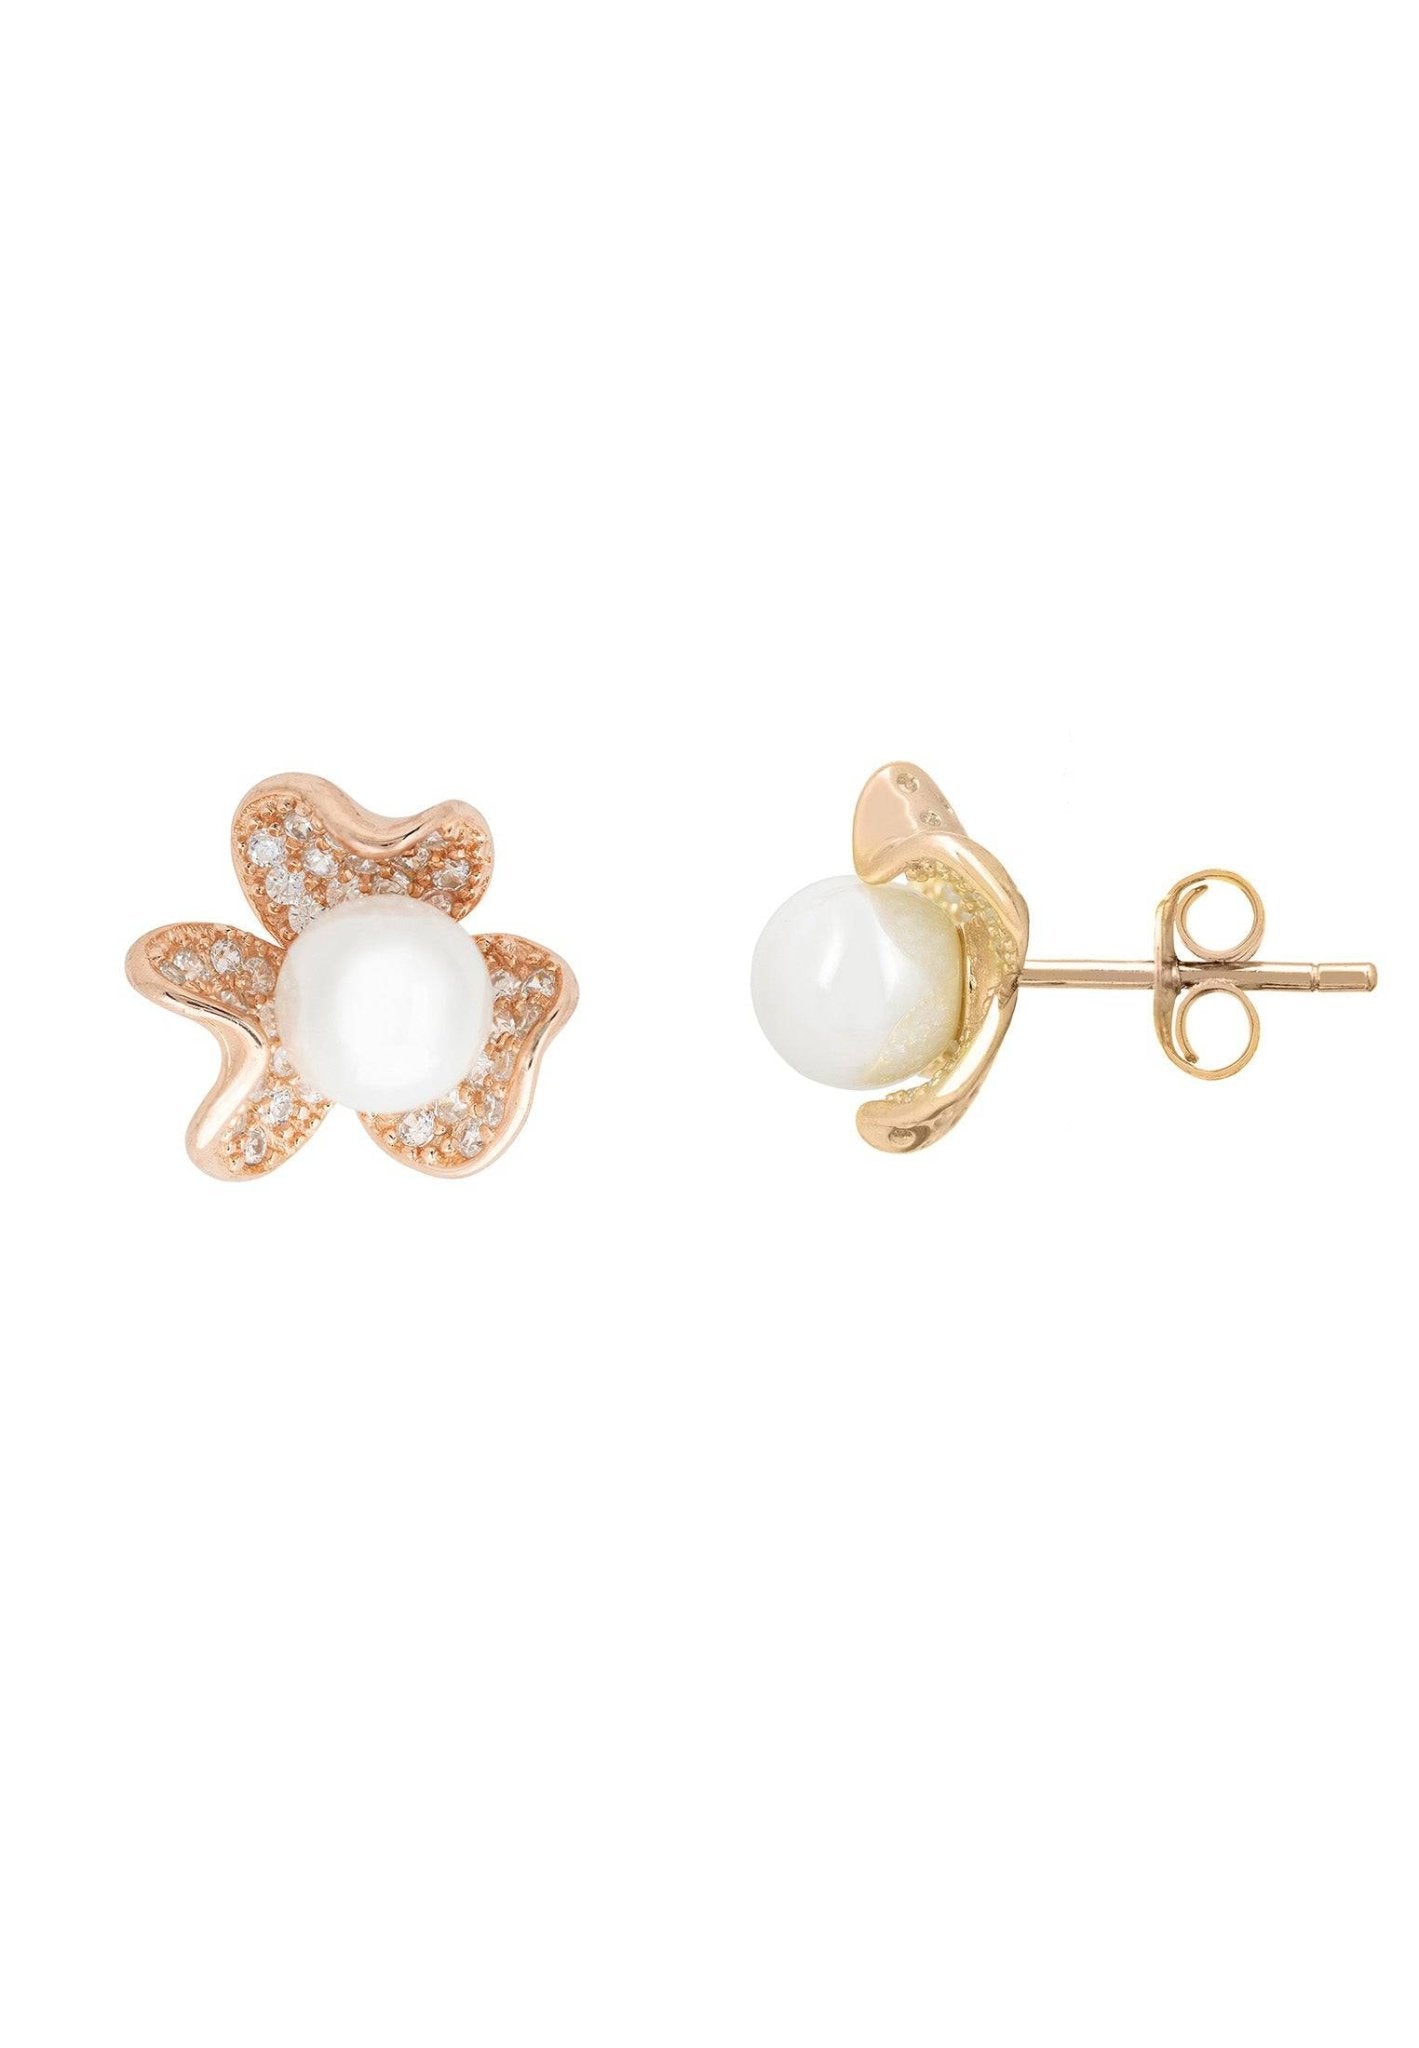 Petals And Pearl Stud Earrings Rosegold - LATELITA Earrings